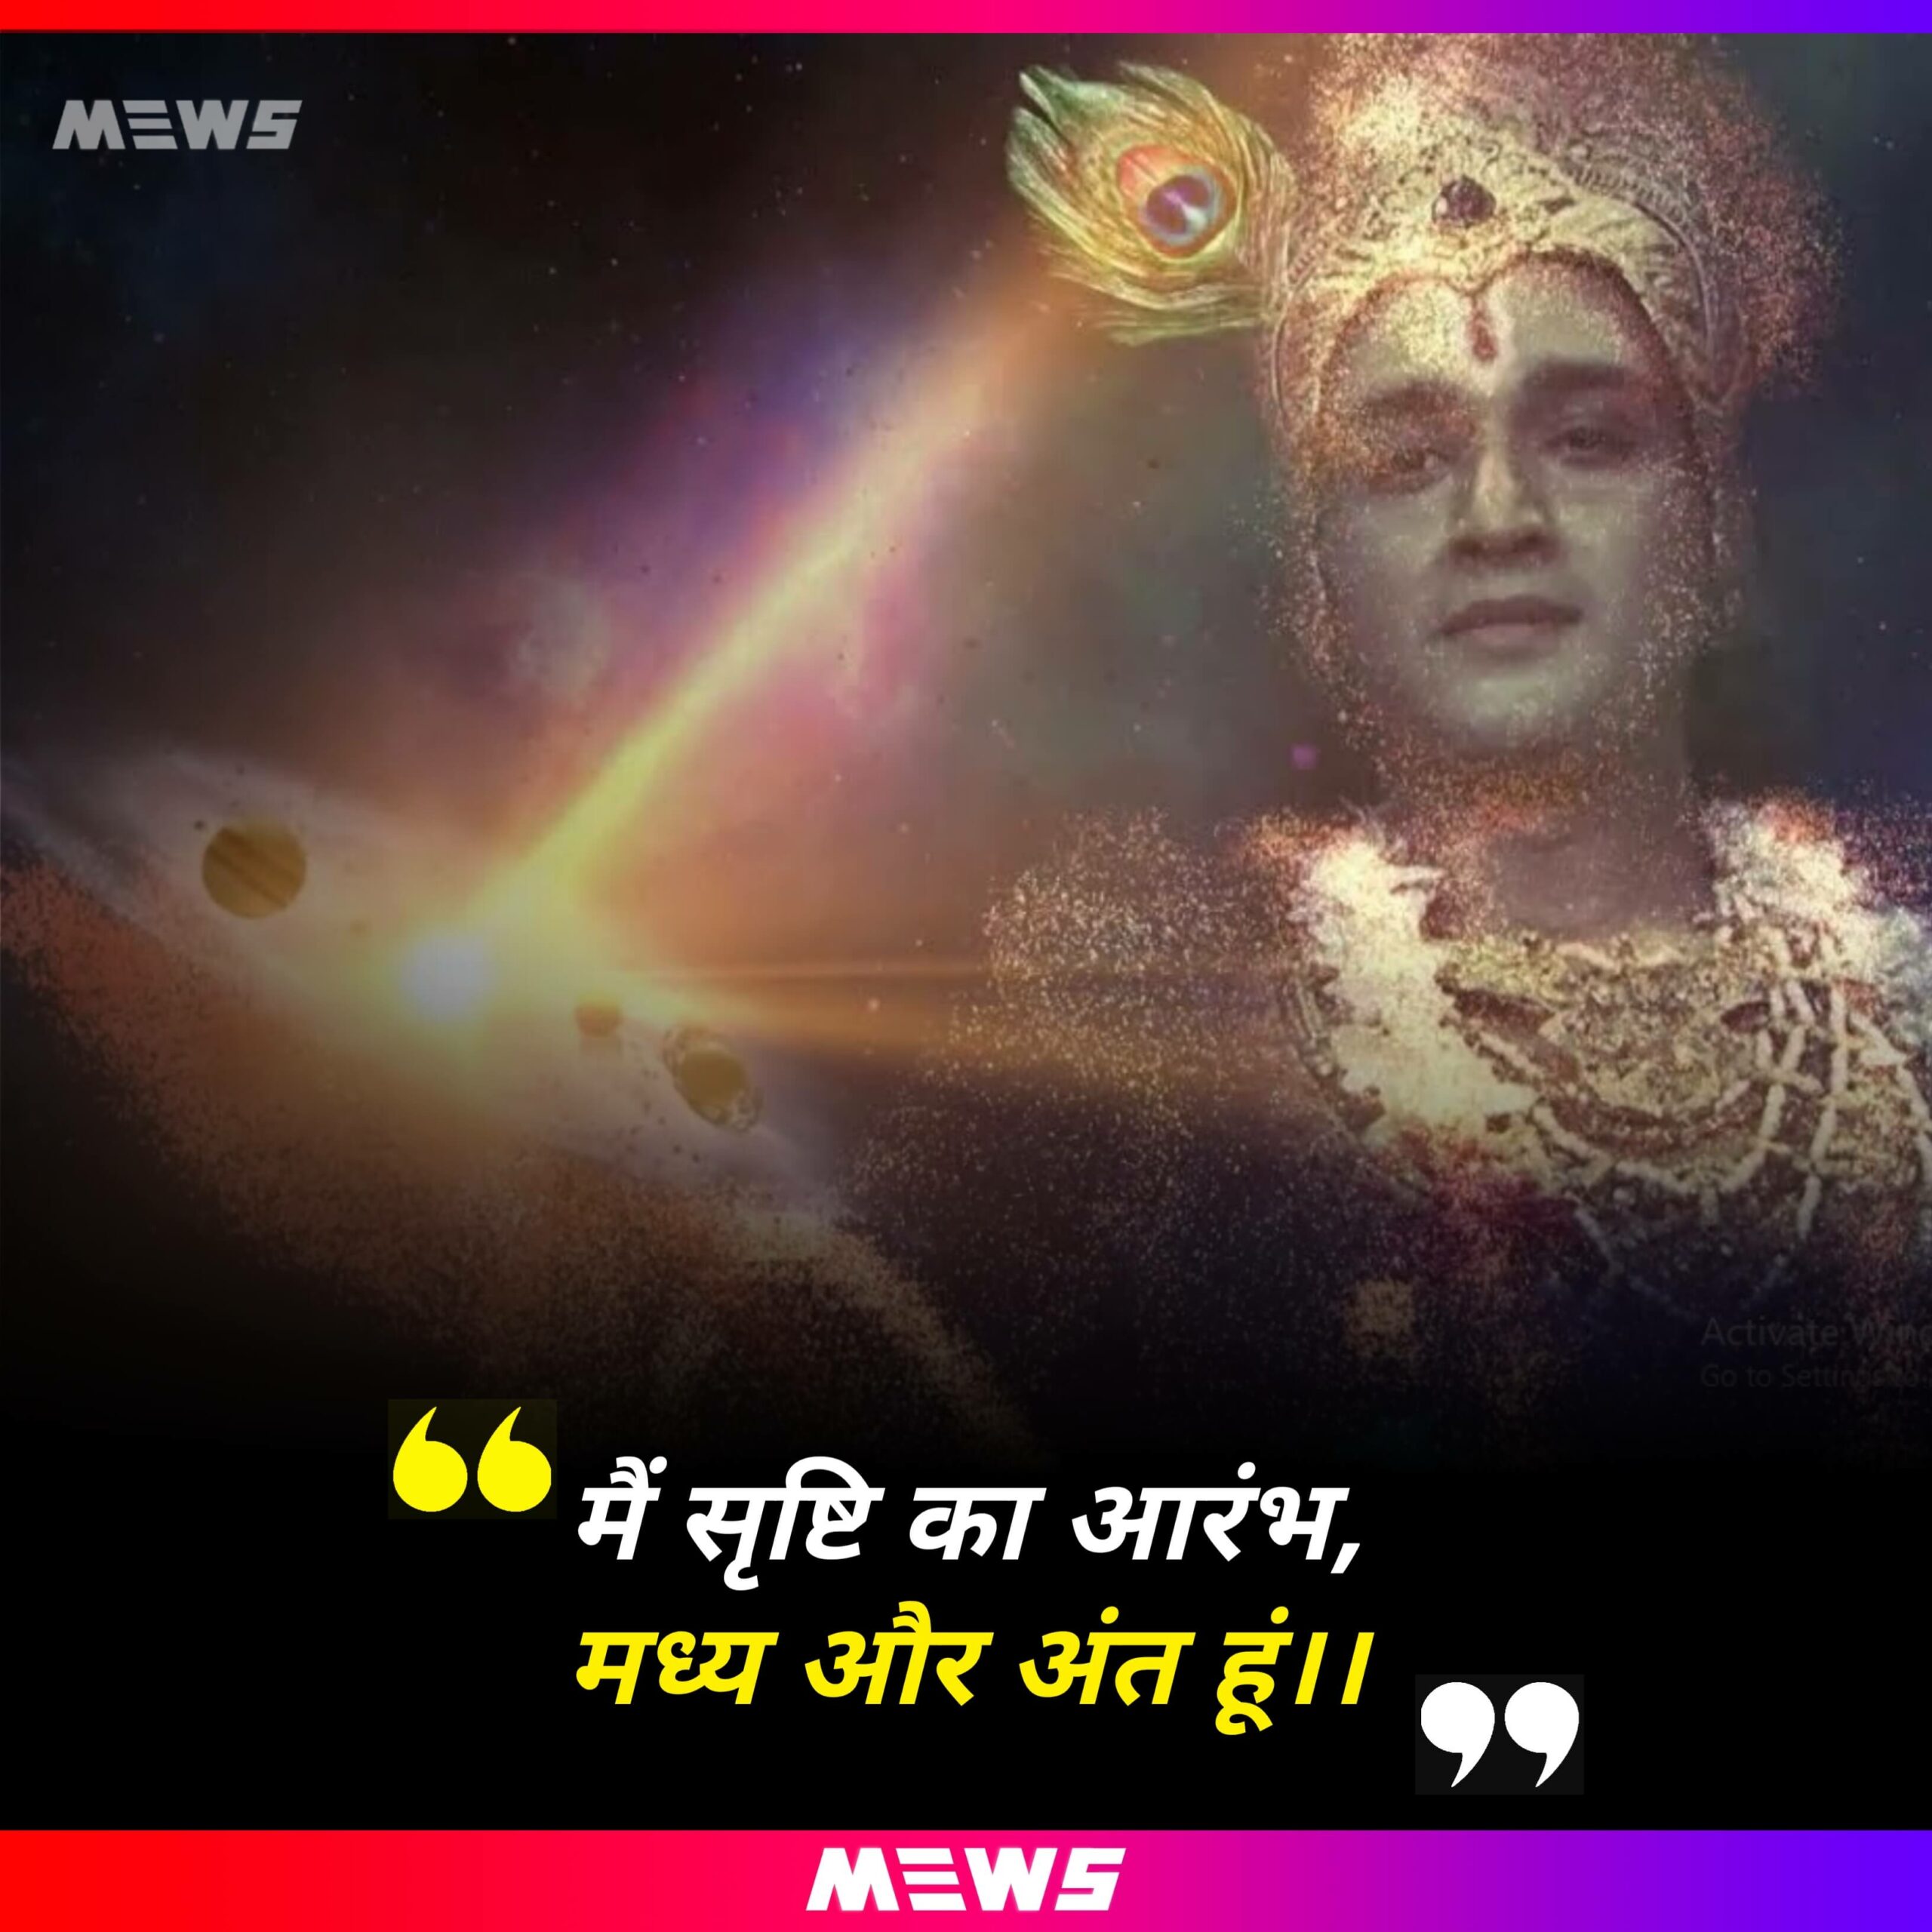 Quotes of Lord Krishna Hindi